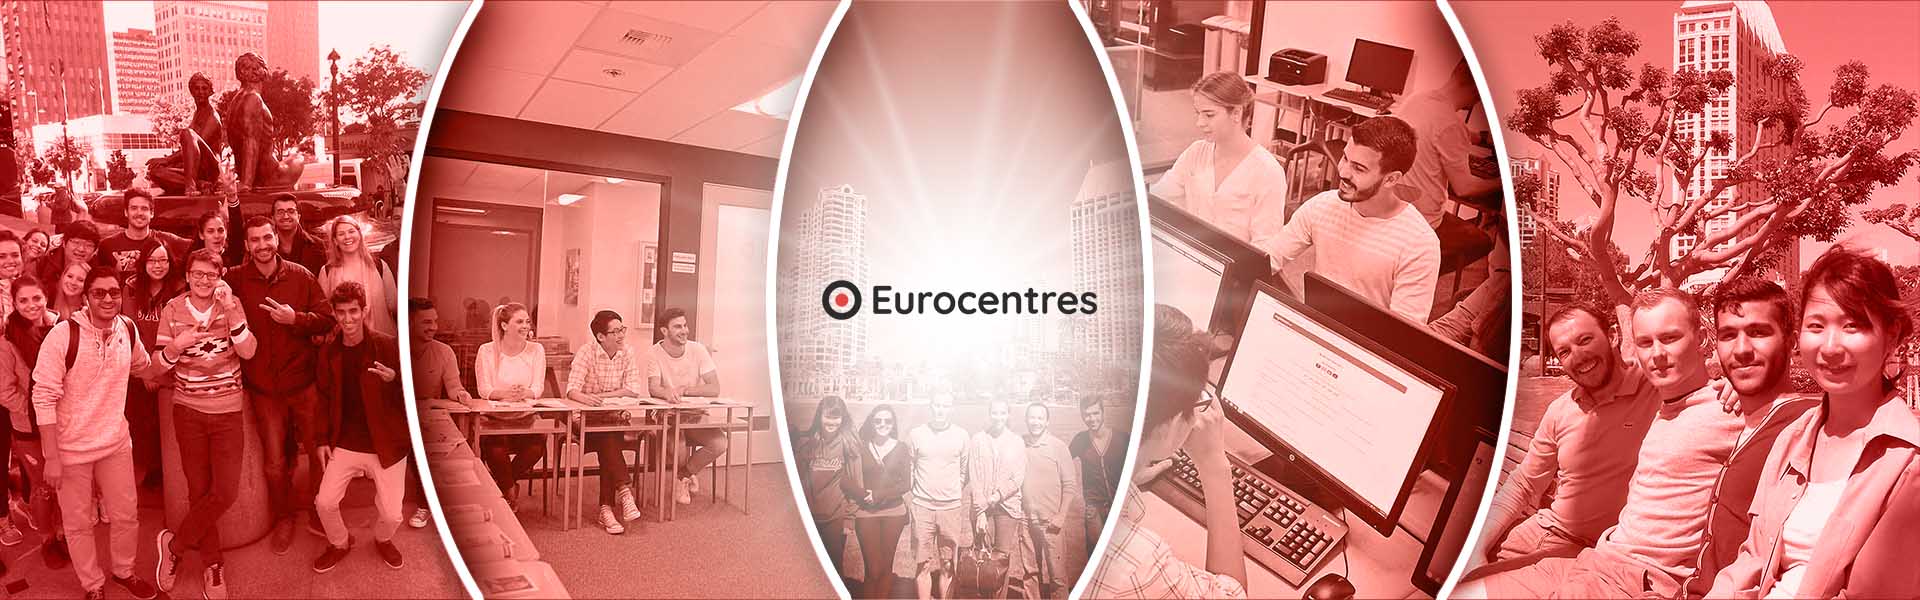 Eurocenters – Oxford International San Diego